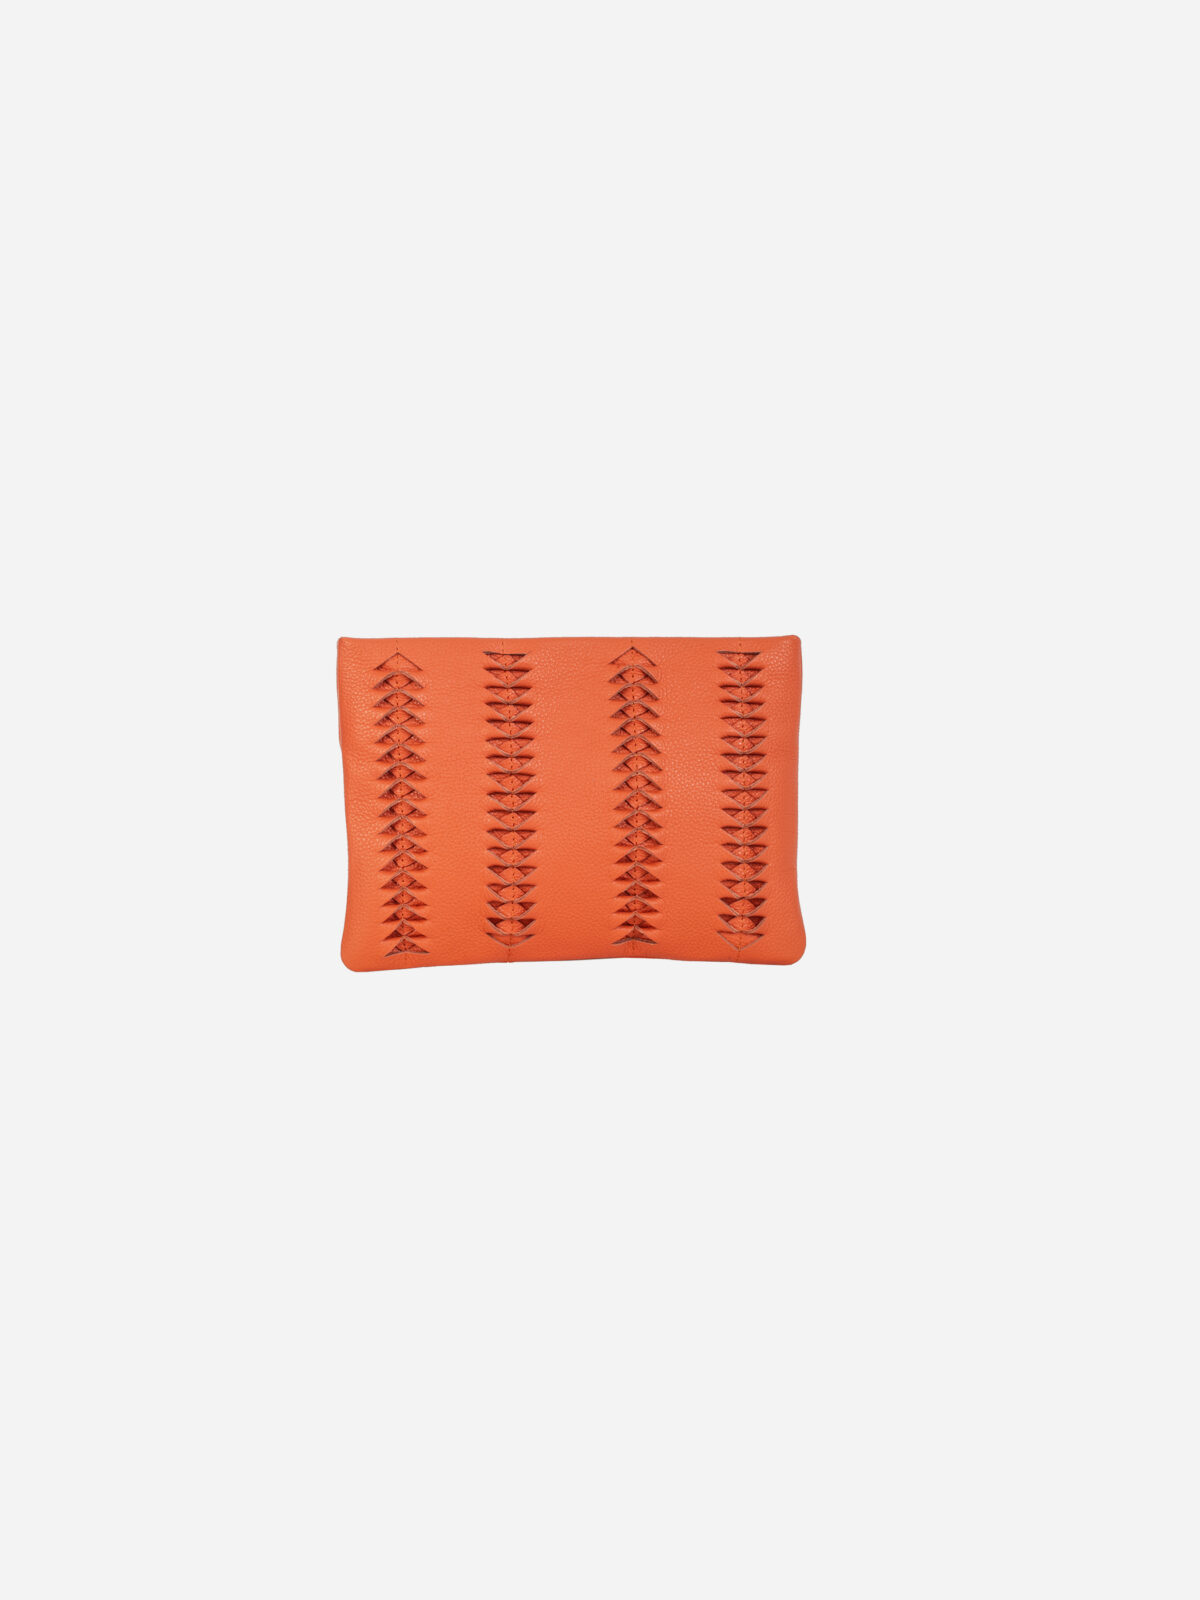 PARK_HOUSE_fishbone-clutch-retro-orange-leather-bag-pochette-greek-designers-matchboxathens